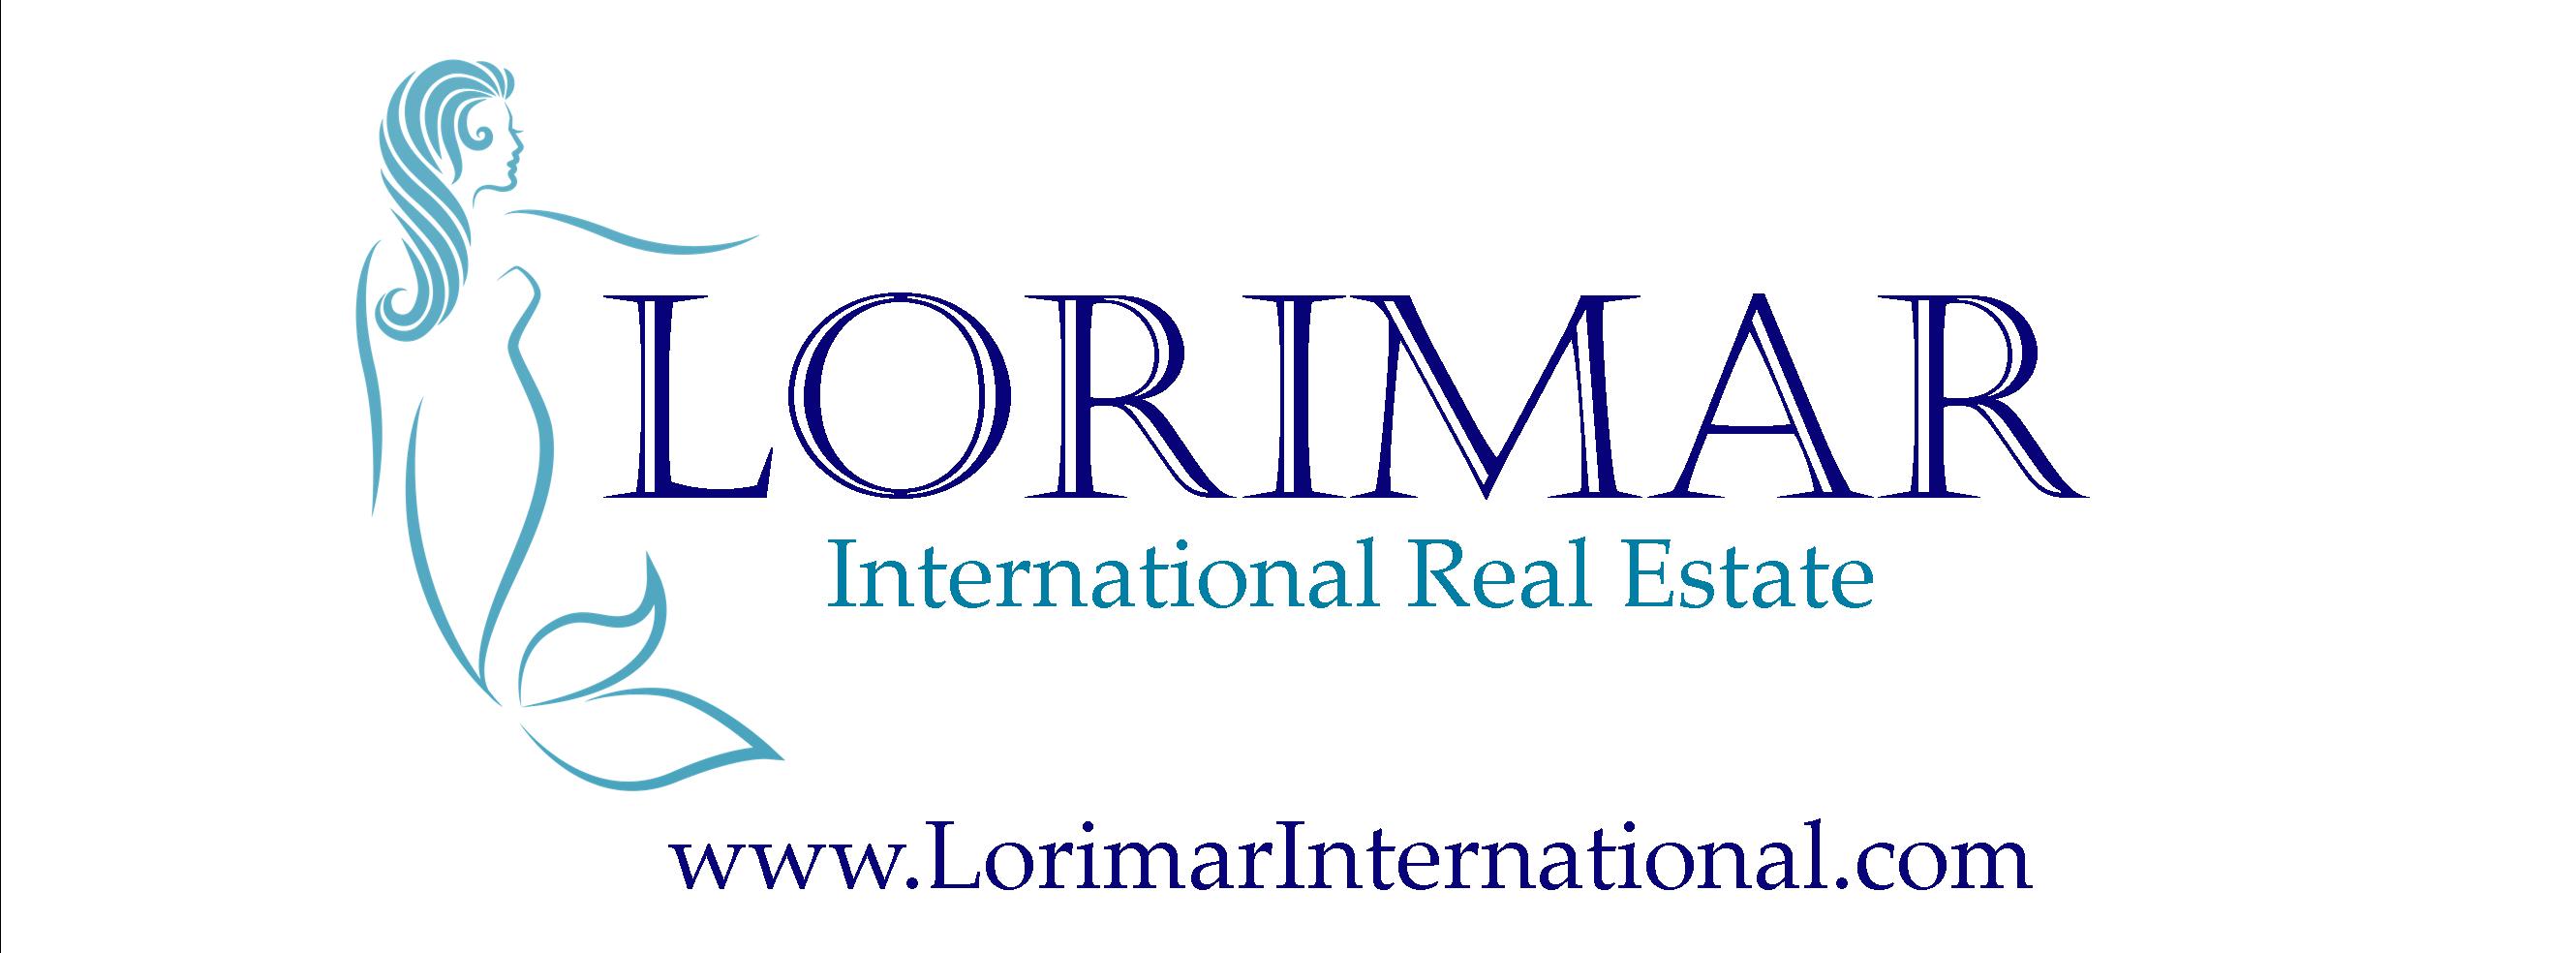 Lorimar International Real Estate